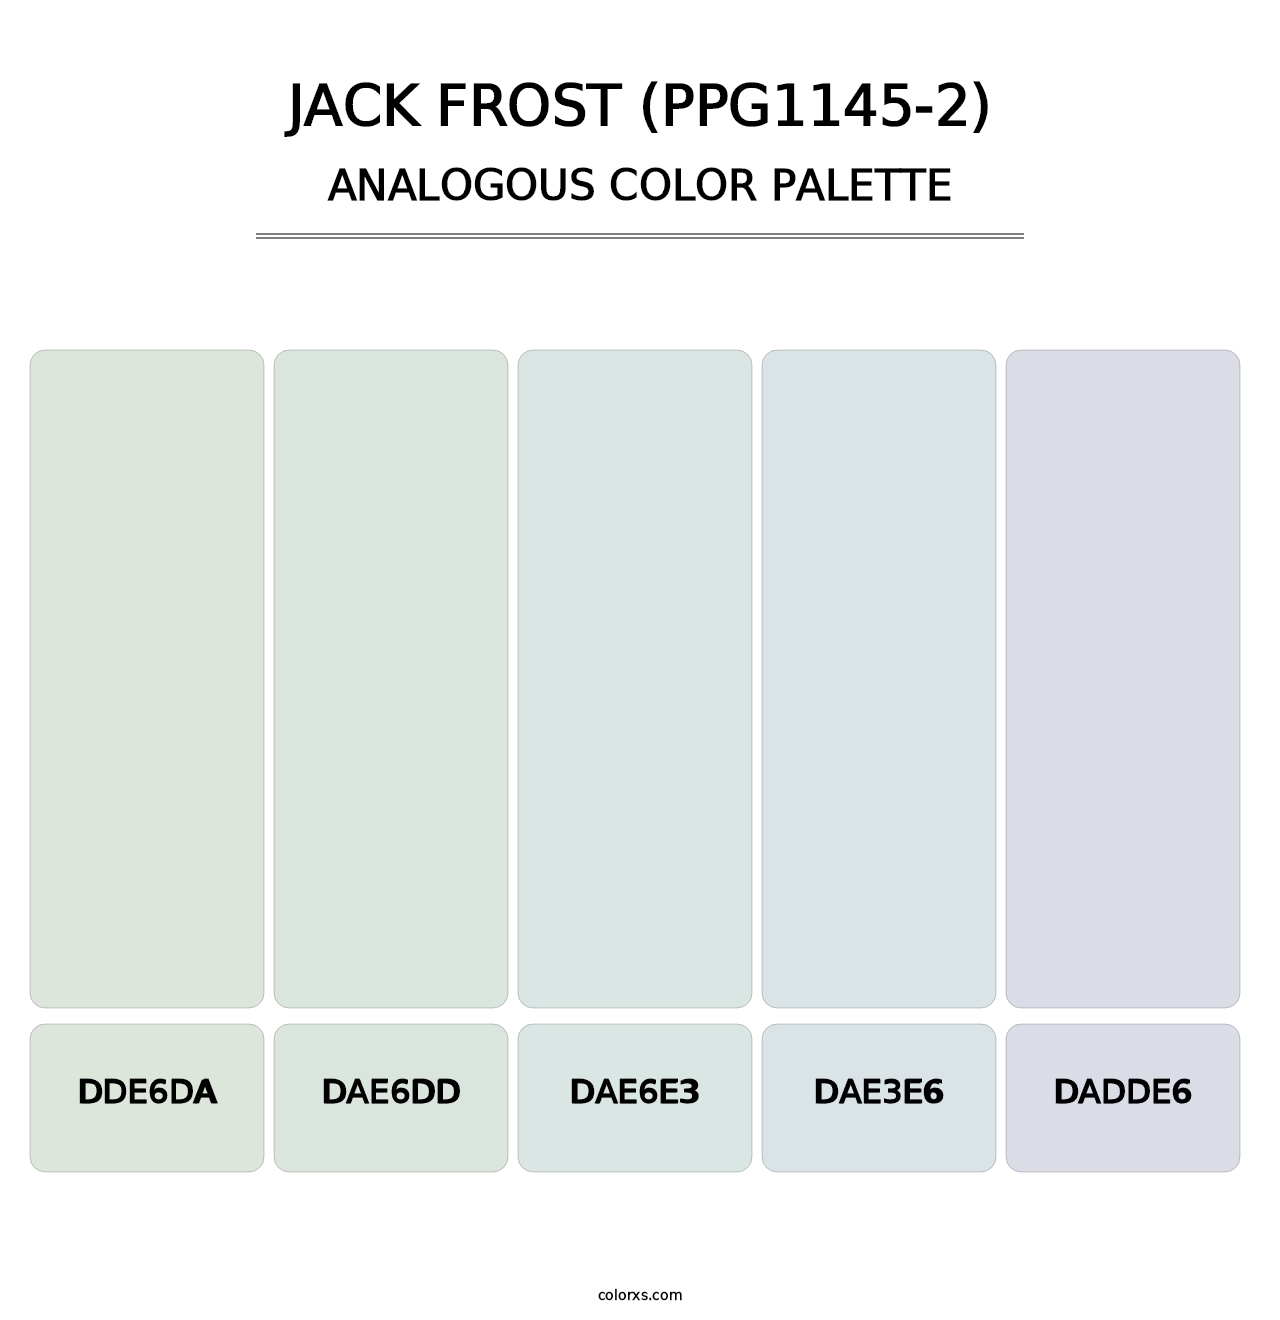 Jack Frost (PPG1145-2) - Analogous Color Palette